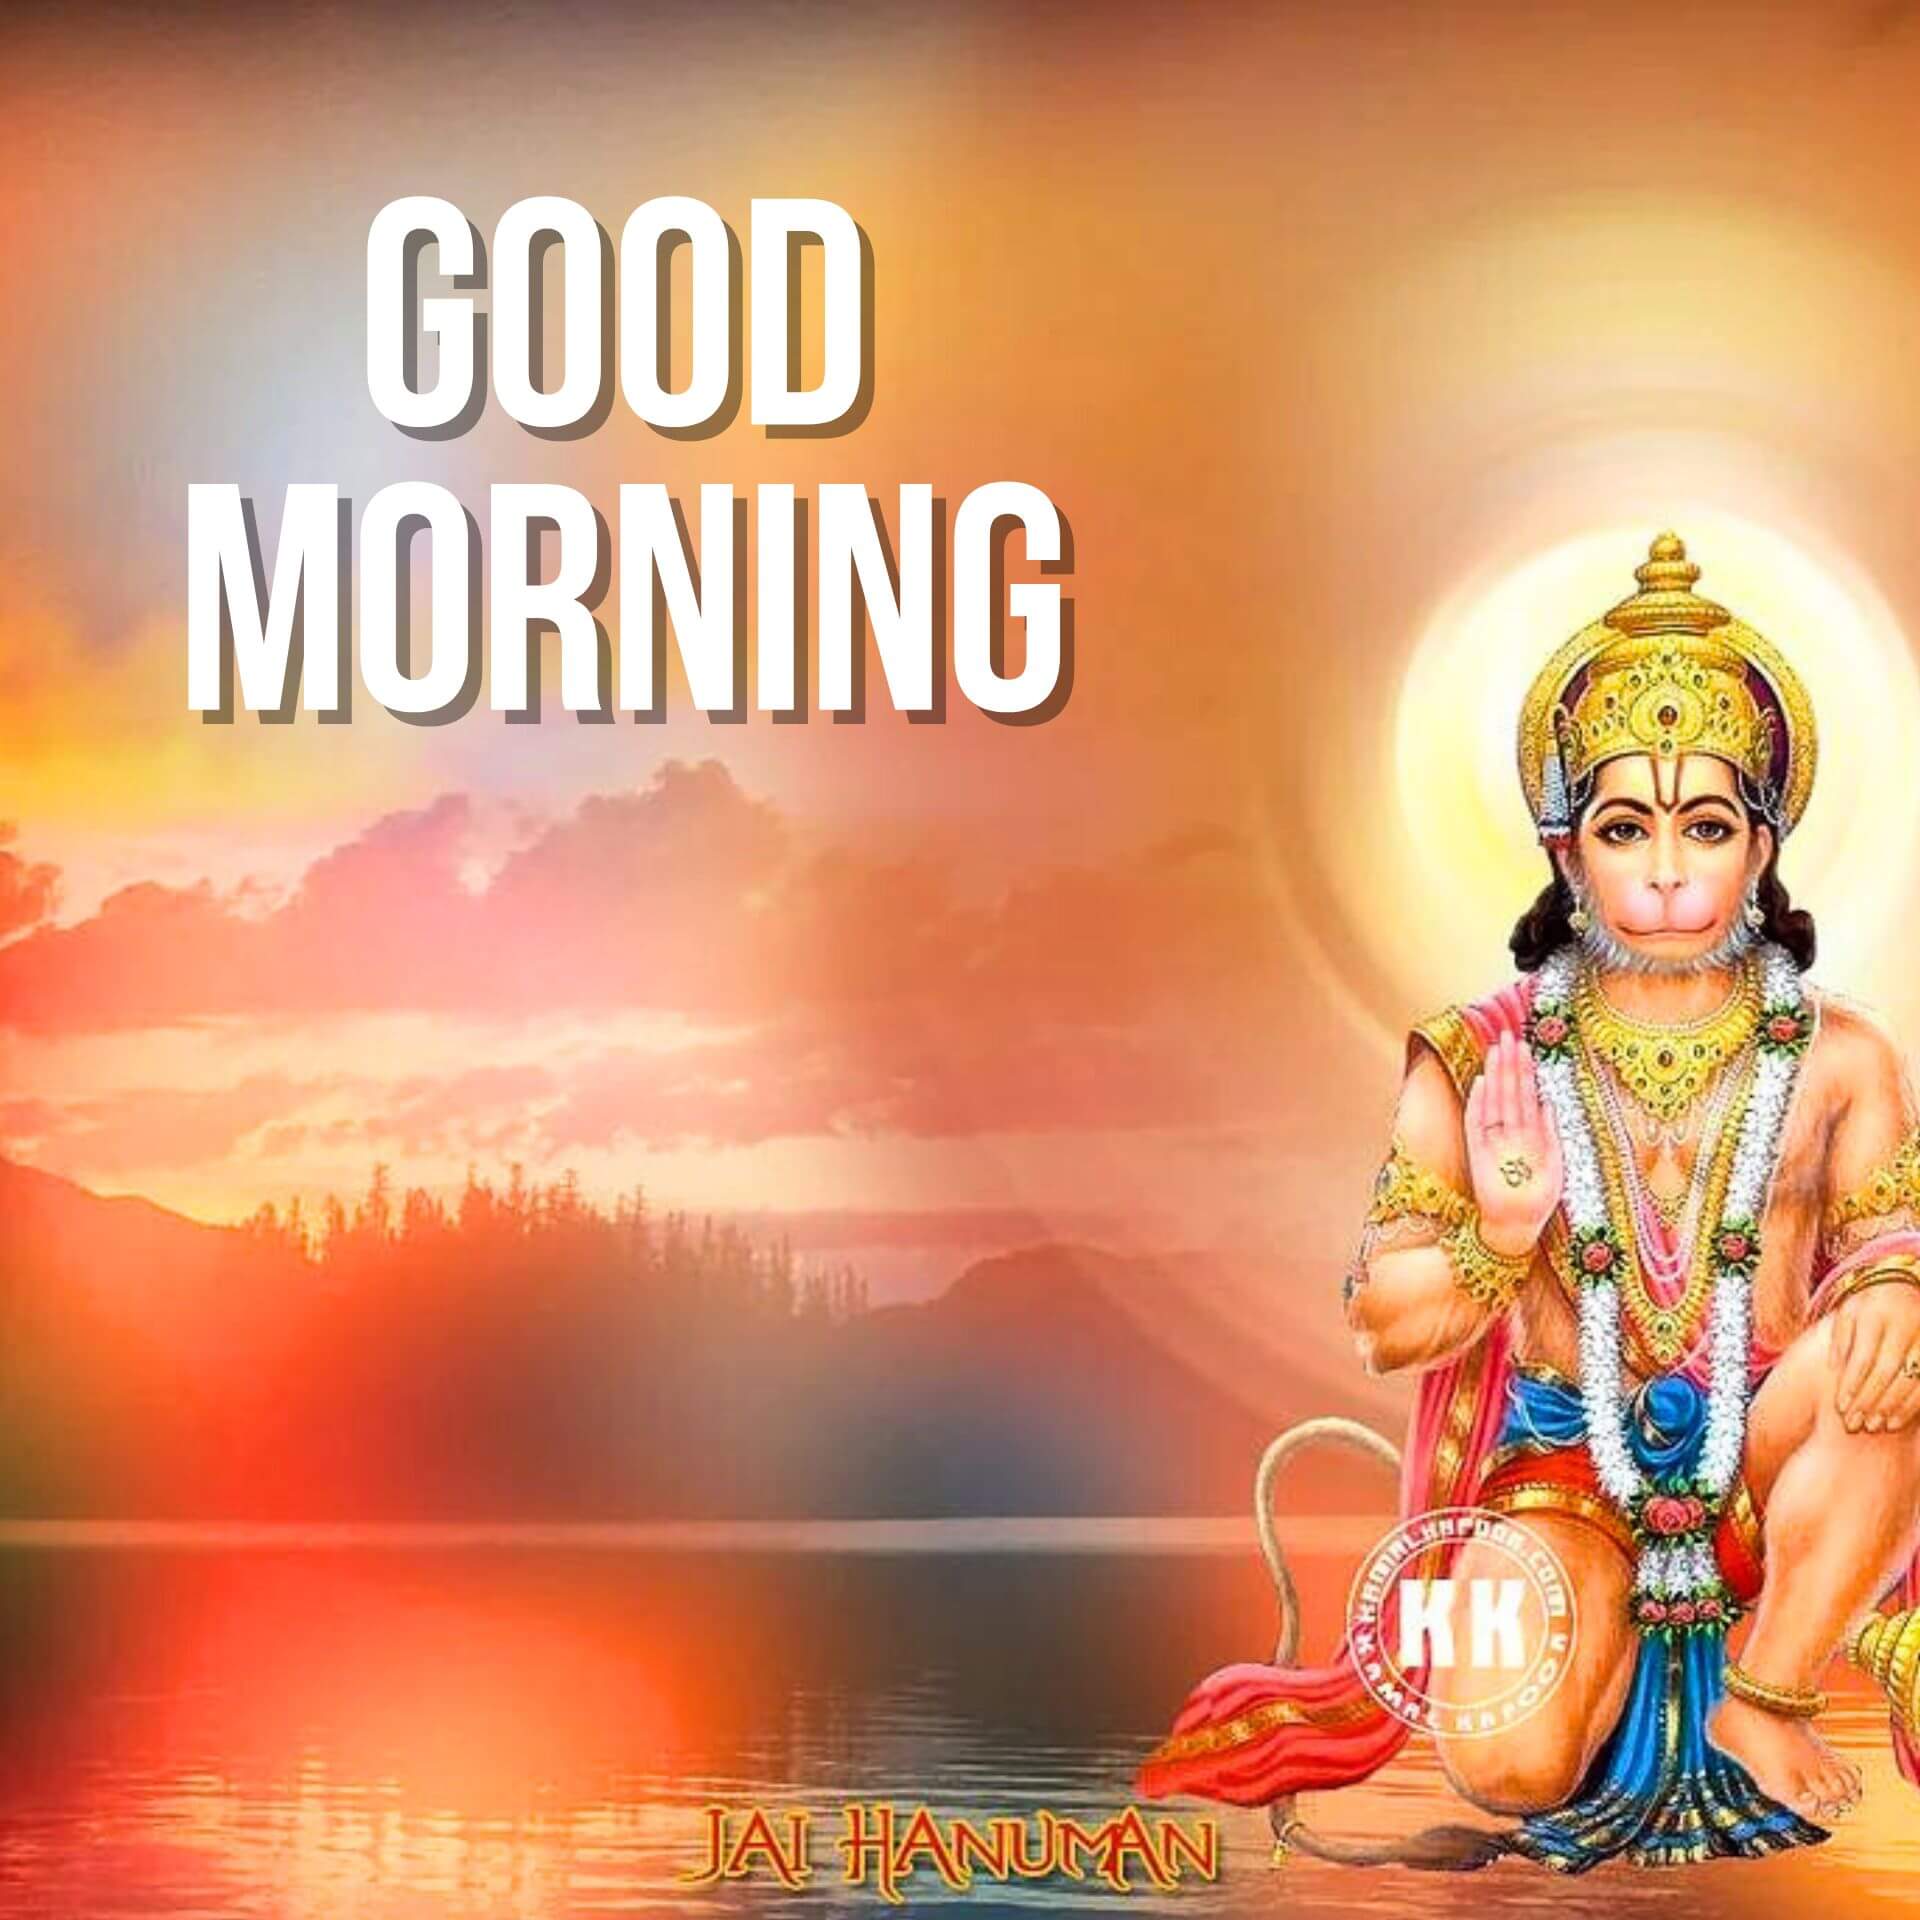 hanuman ji good morning Wallpaper Free Download 3